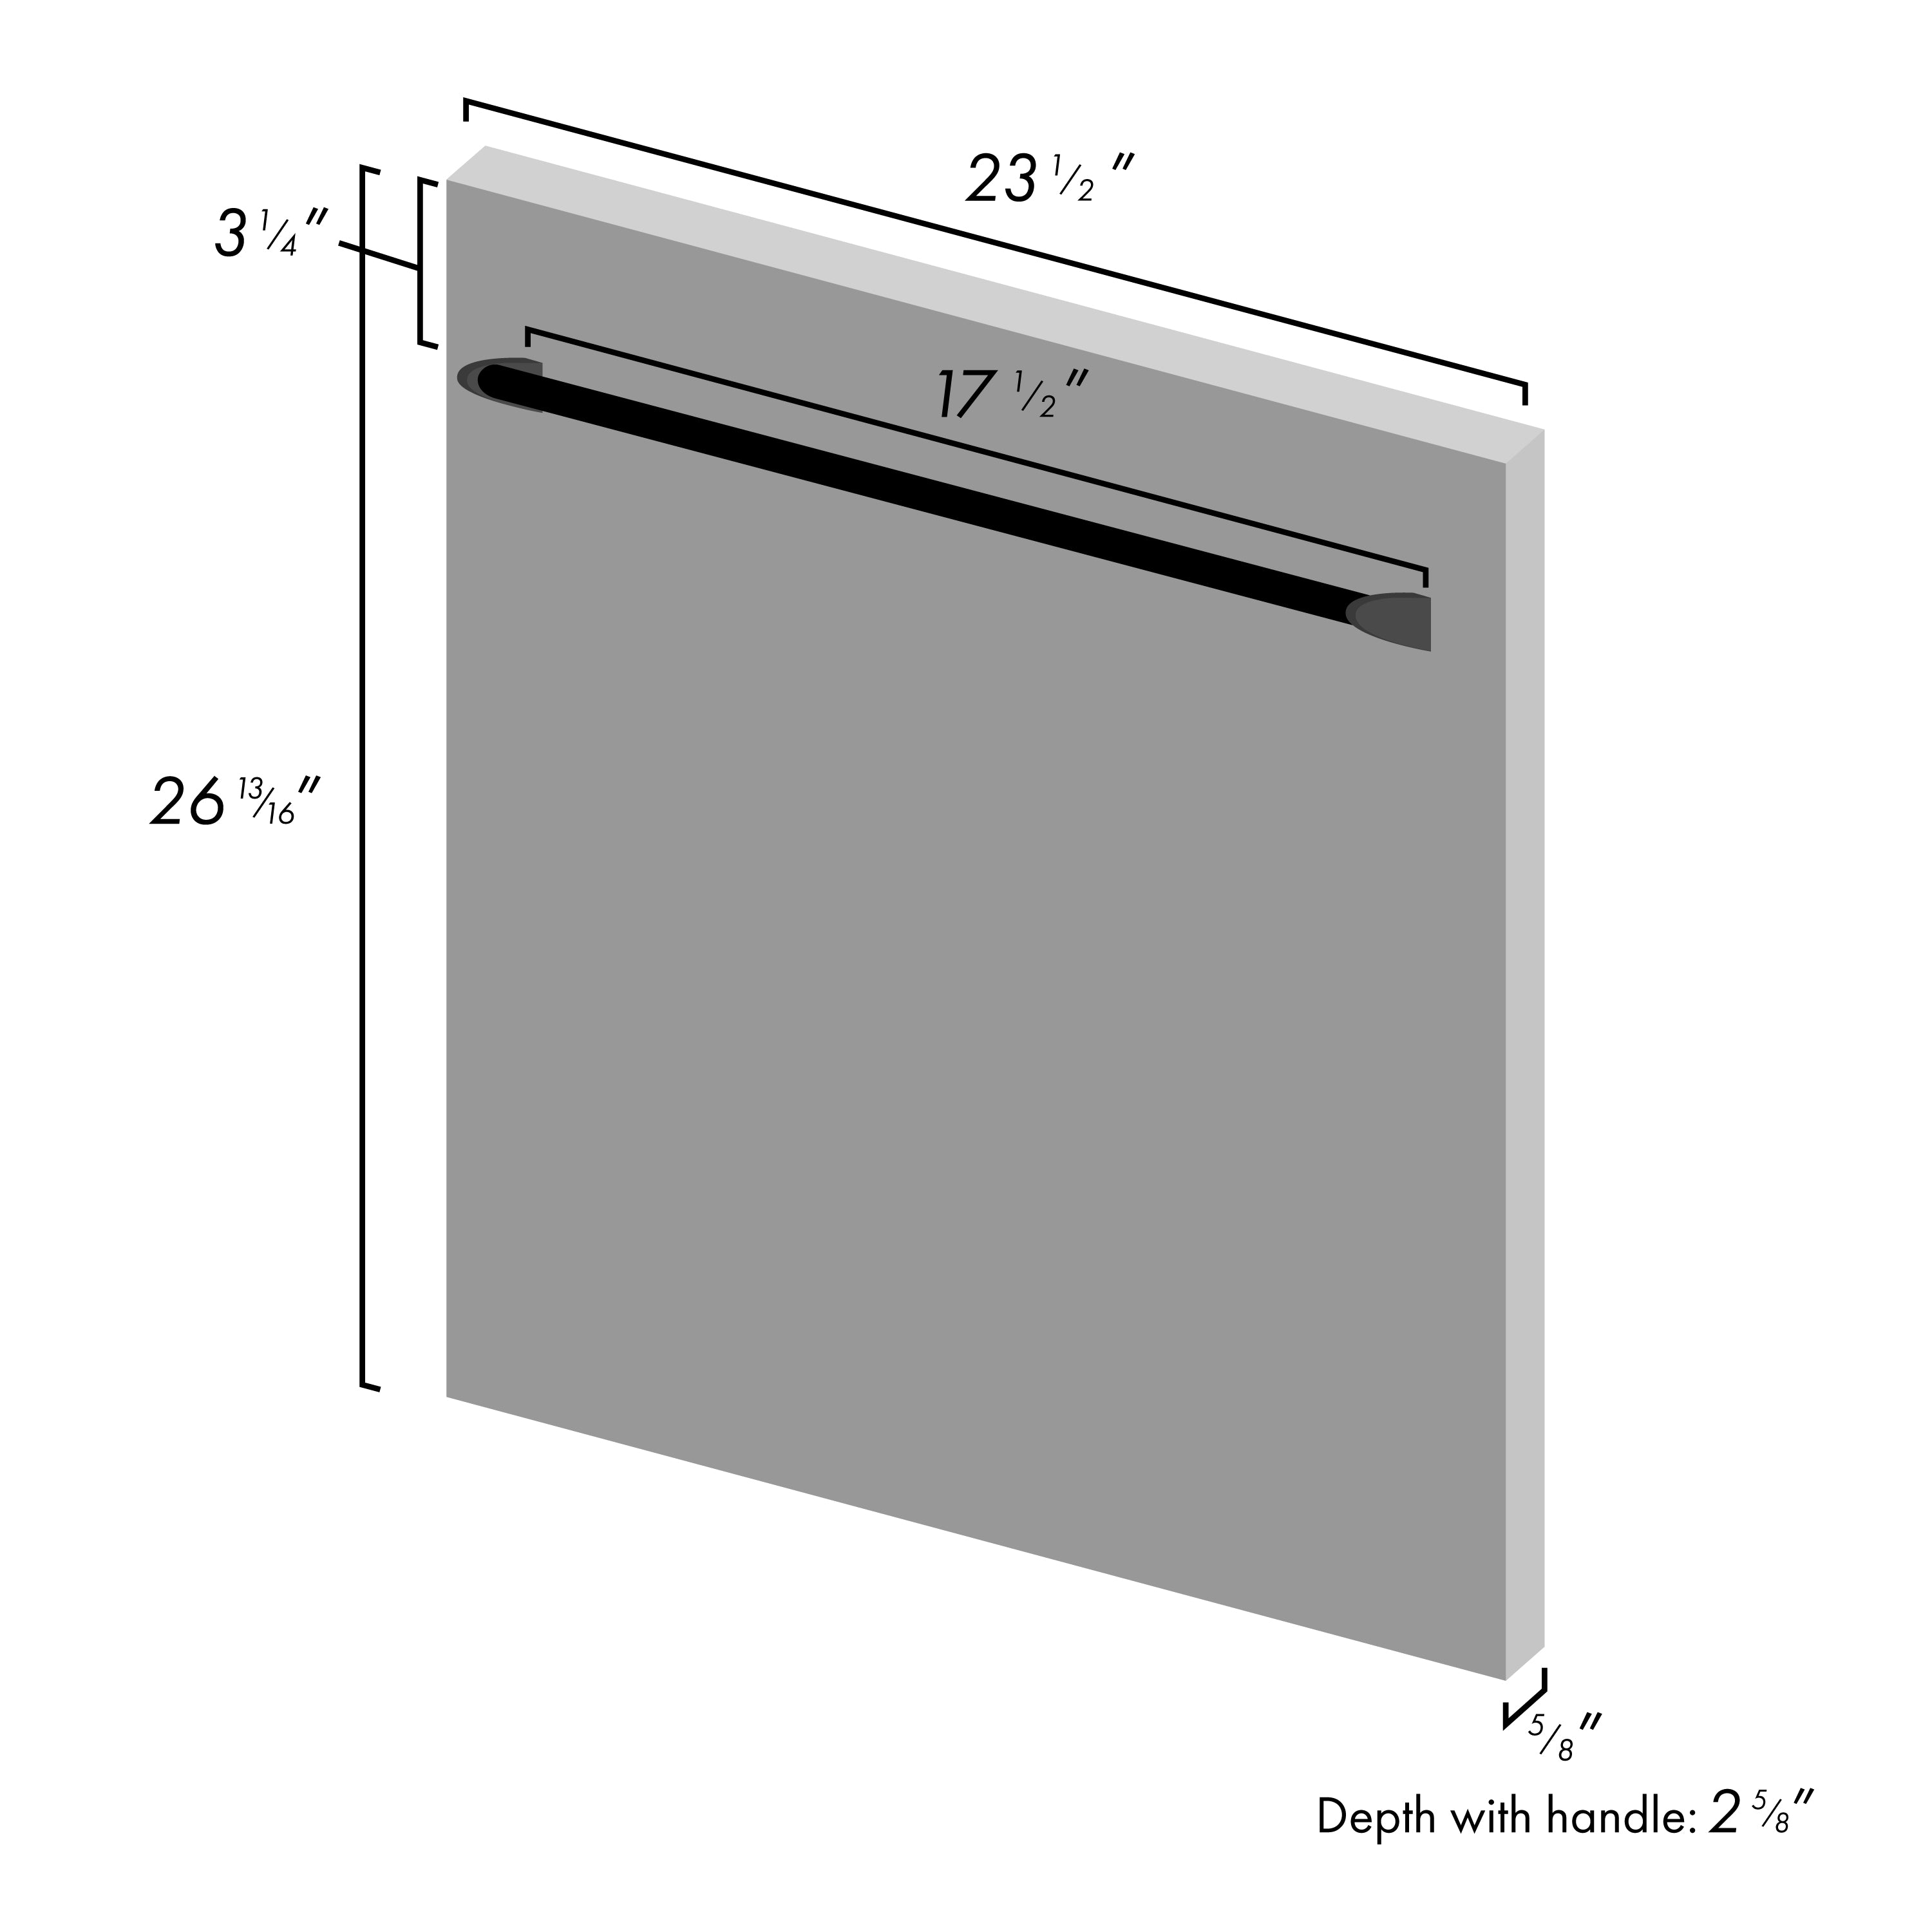 ZLINE 24" Dishwasher Panel in Fingerprint Resistant Finish with Traditional Handle (DP-SN-H-24)